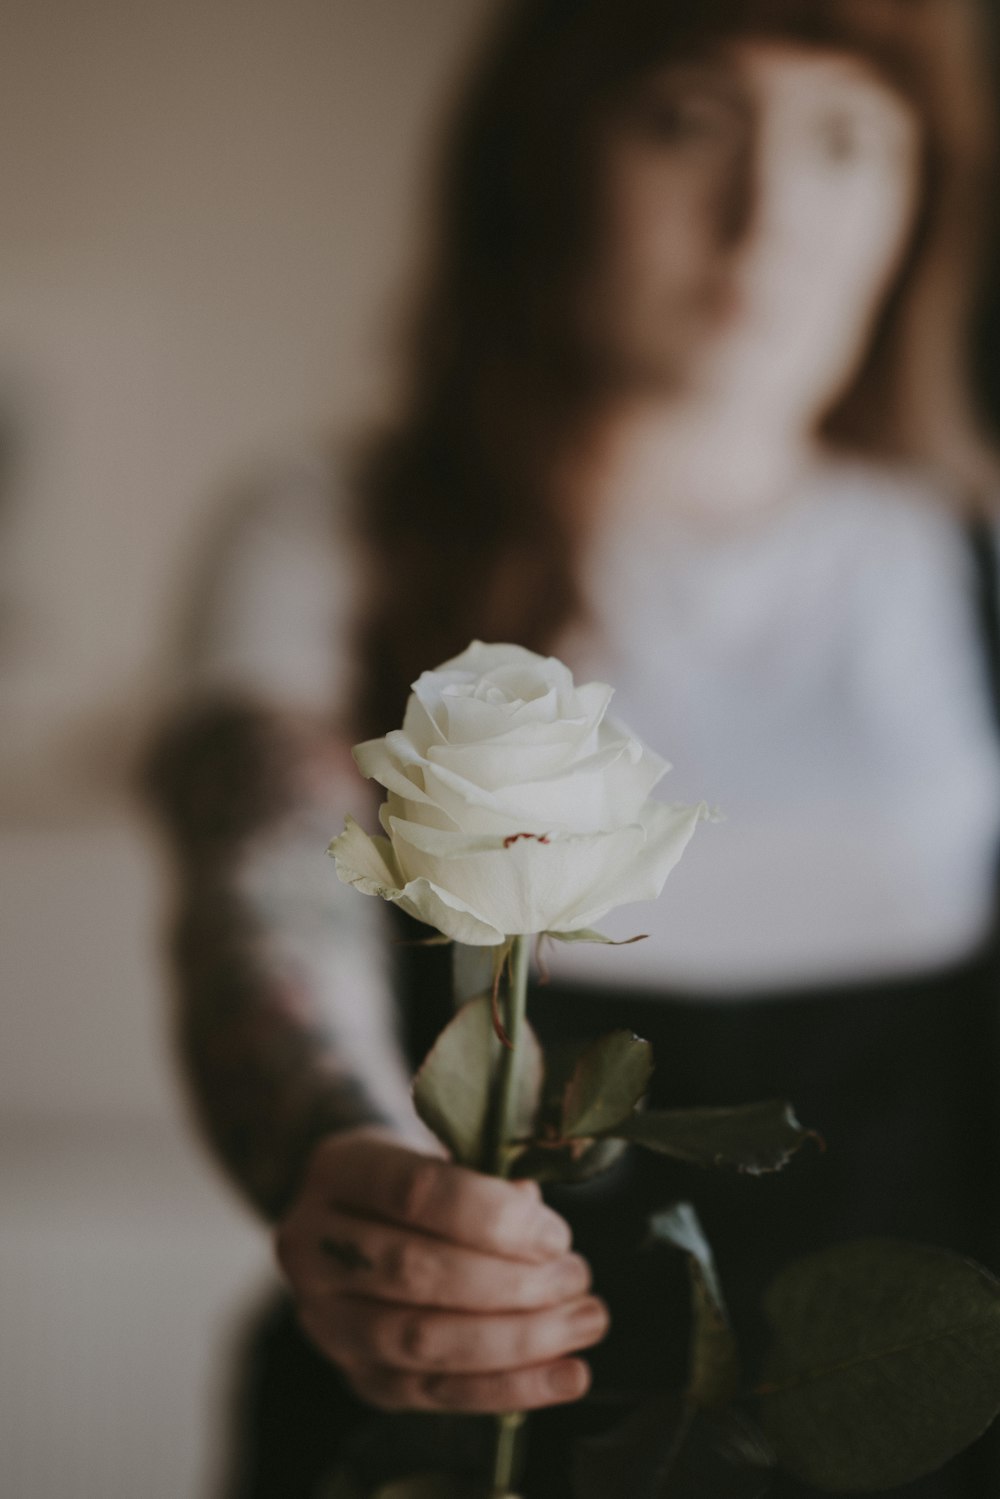 Mujer sosteniendo una rosa blanca